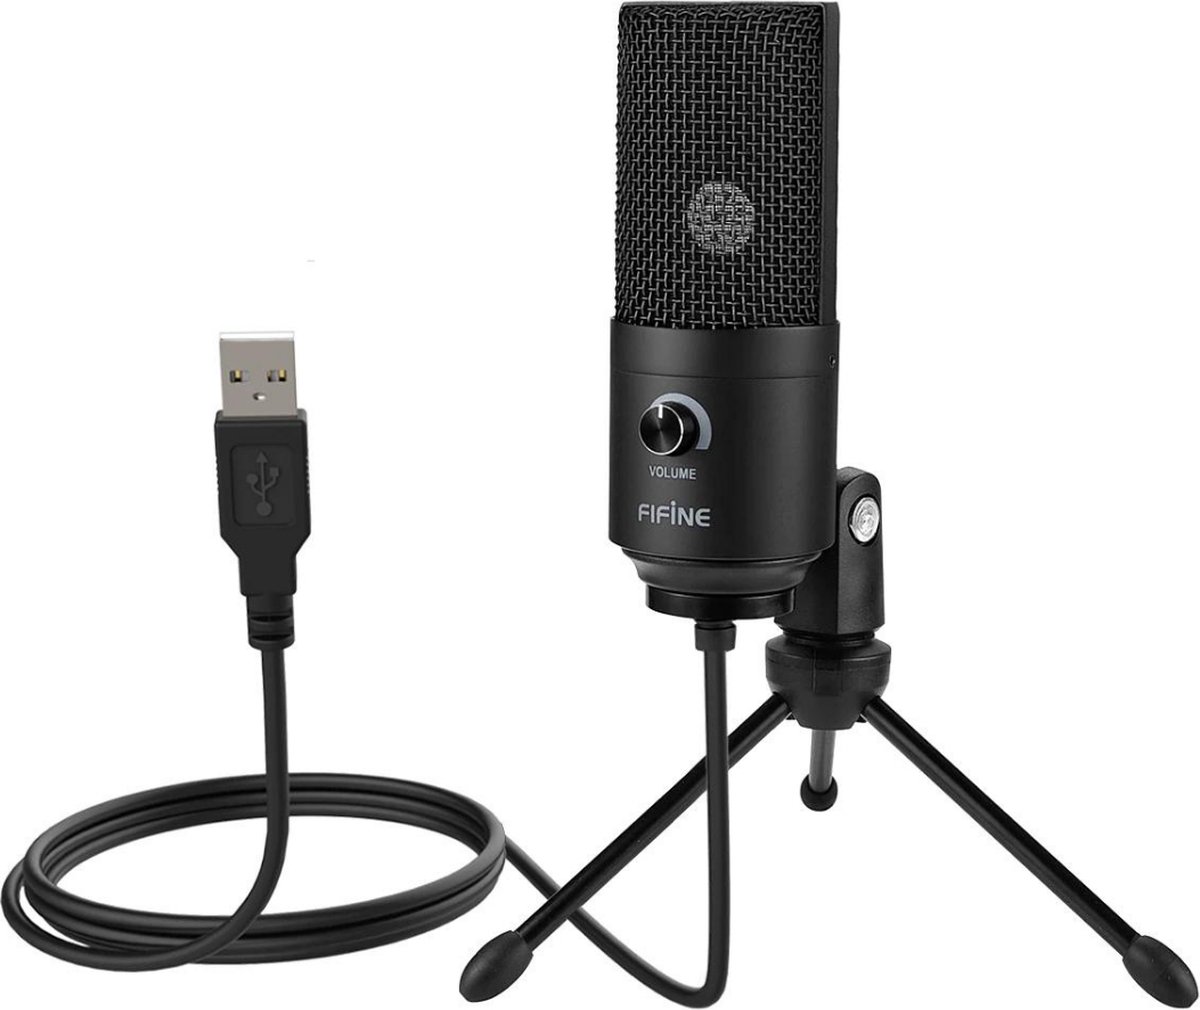 USB microfoon – Metalen USB microfoon – Microfoon arm – Microfoon voor pc – Microfoon standaard – Microfoon met arm – Zang microfoon – Voor Studio Opname, Podcast, Livestreaming & Gaming